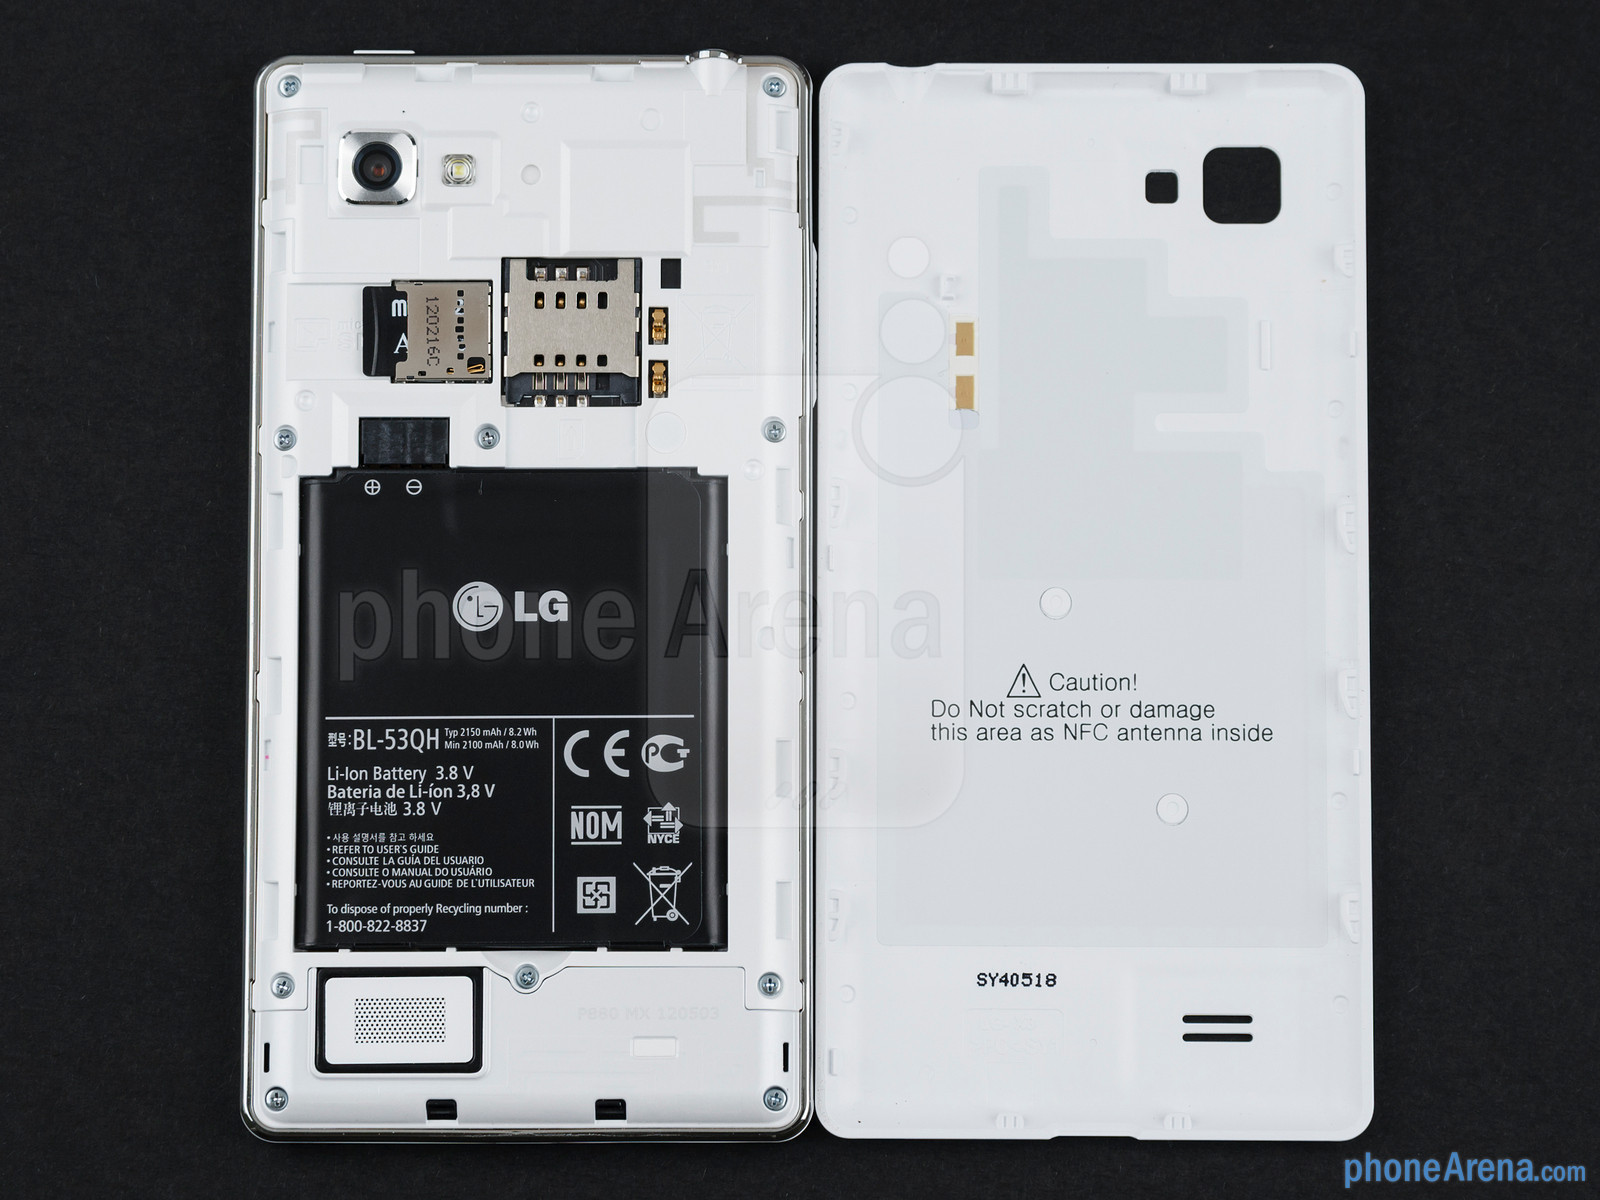 LG-Optimus-4X-HD-Review-05-jpg.jpg